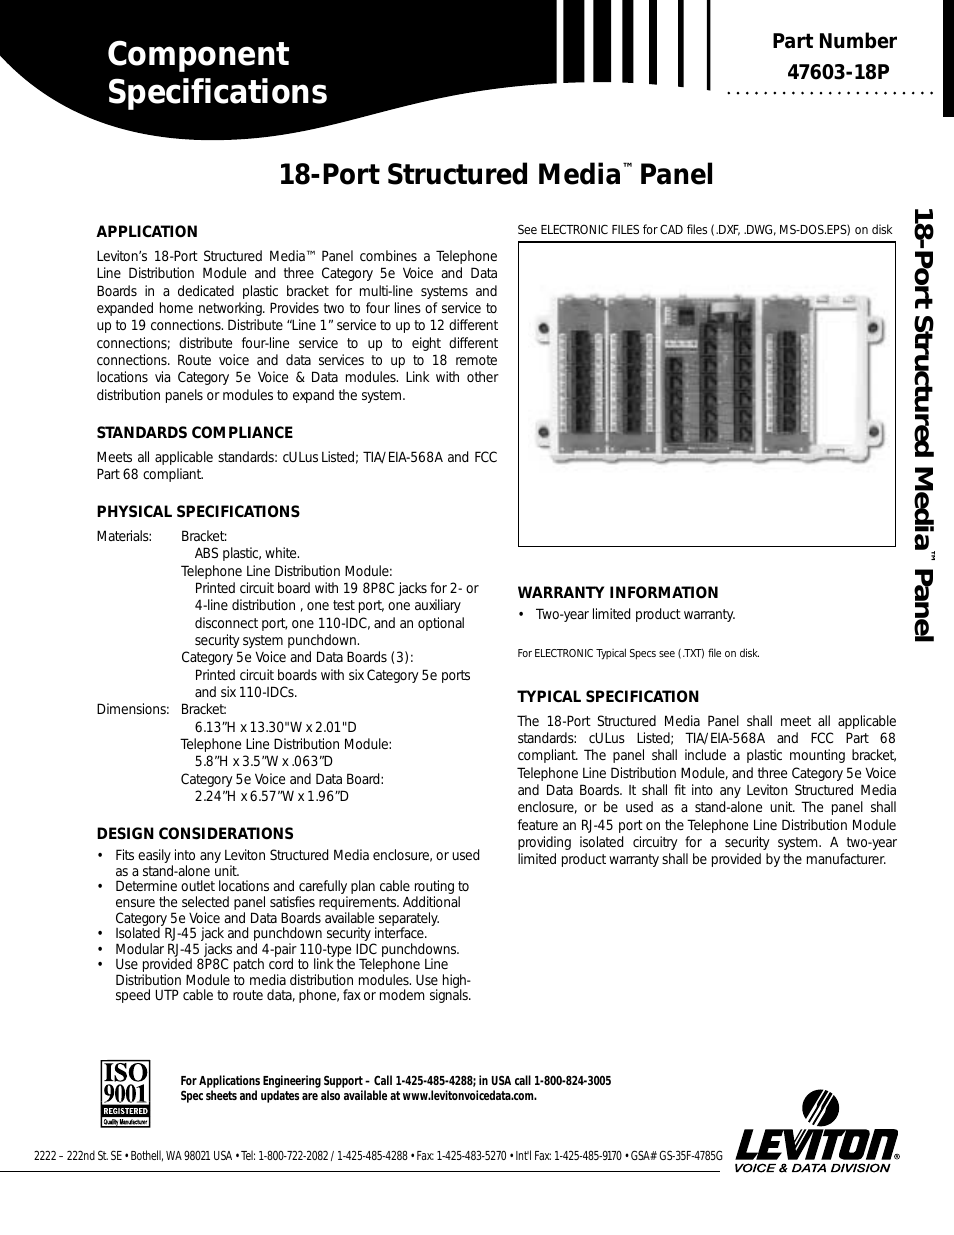 18-Port Structured Media Panel 47603-18P